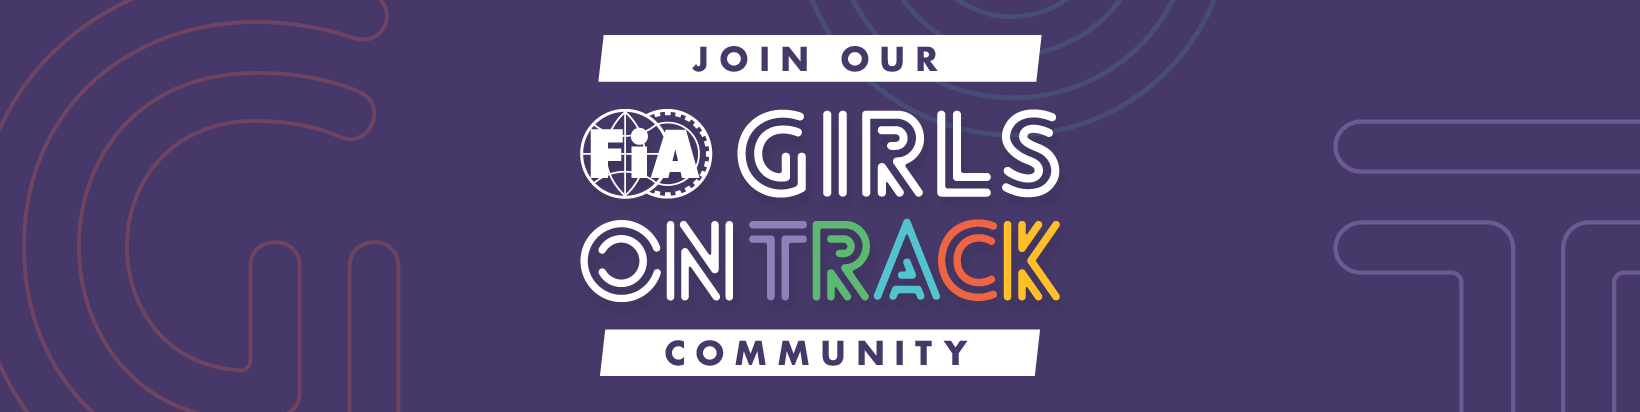 FIA Girls on Track Community